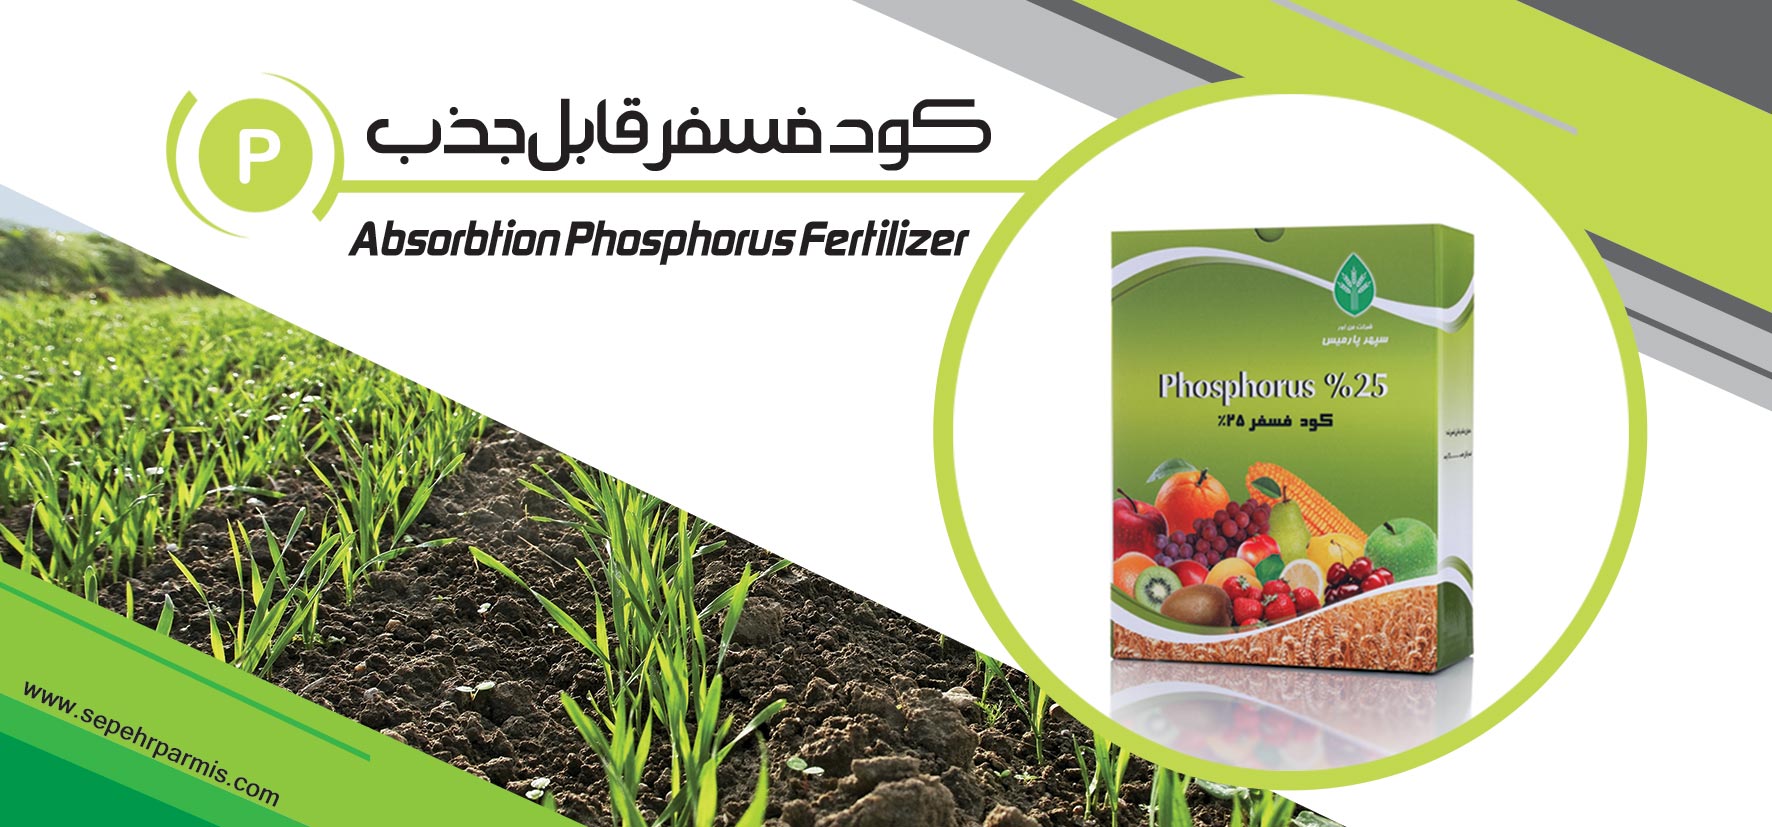 absorbtion phosphorus fertilizer